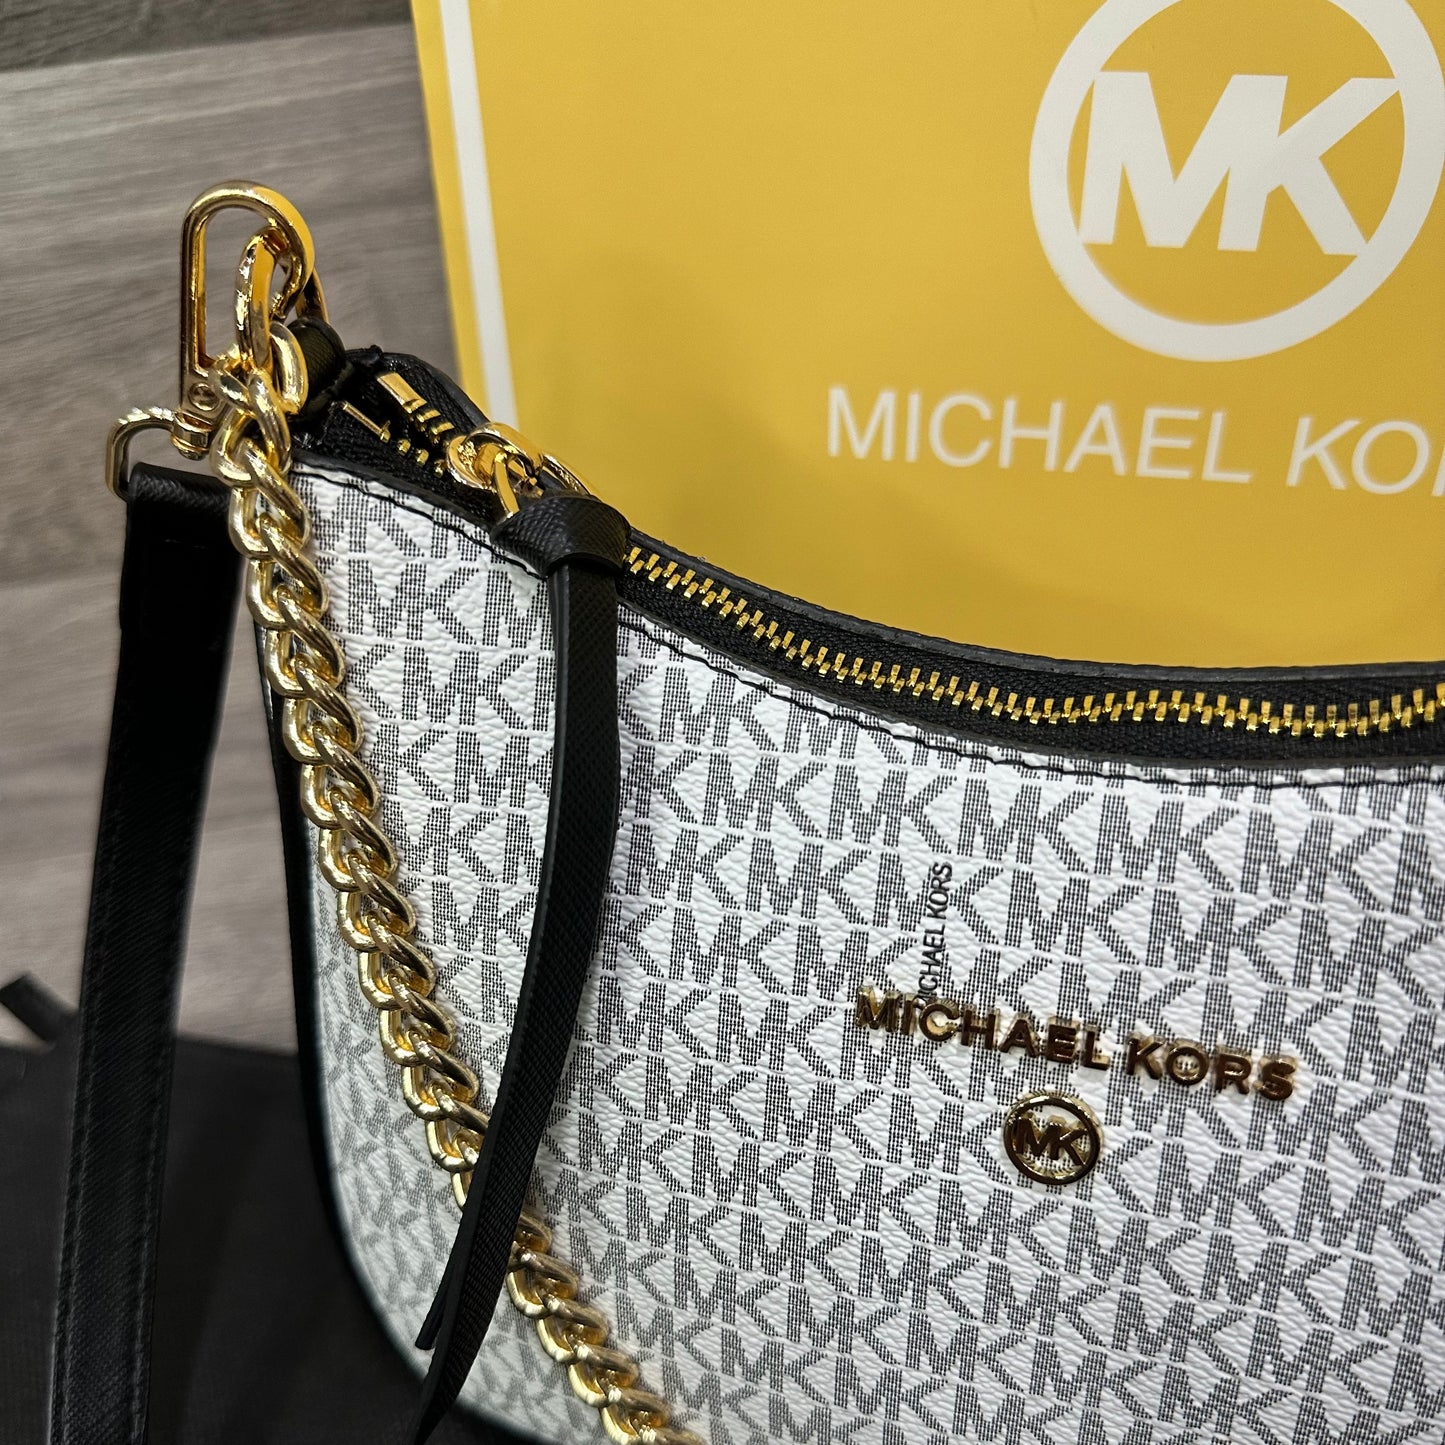 Michael Kors Classic 2 bags